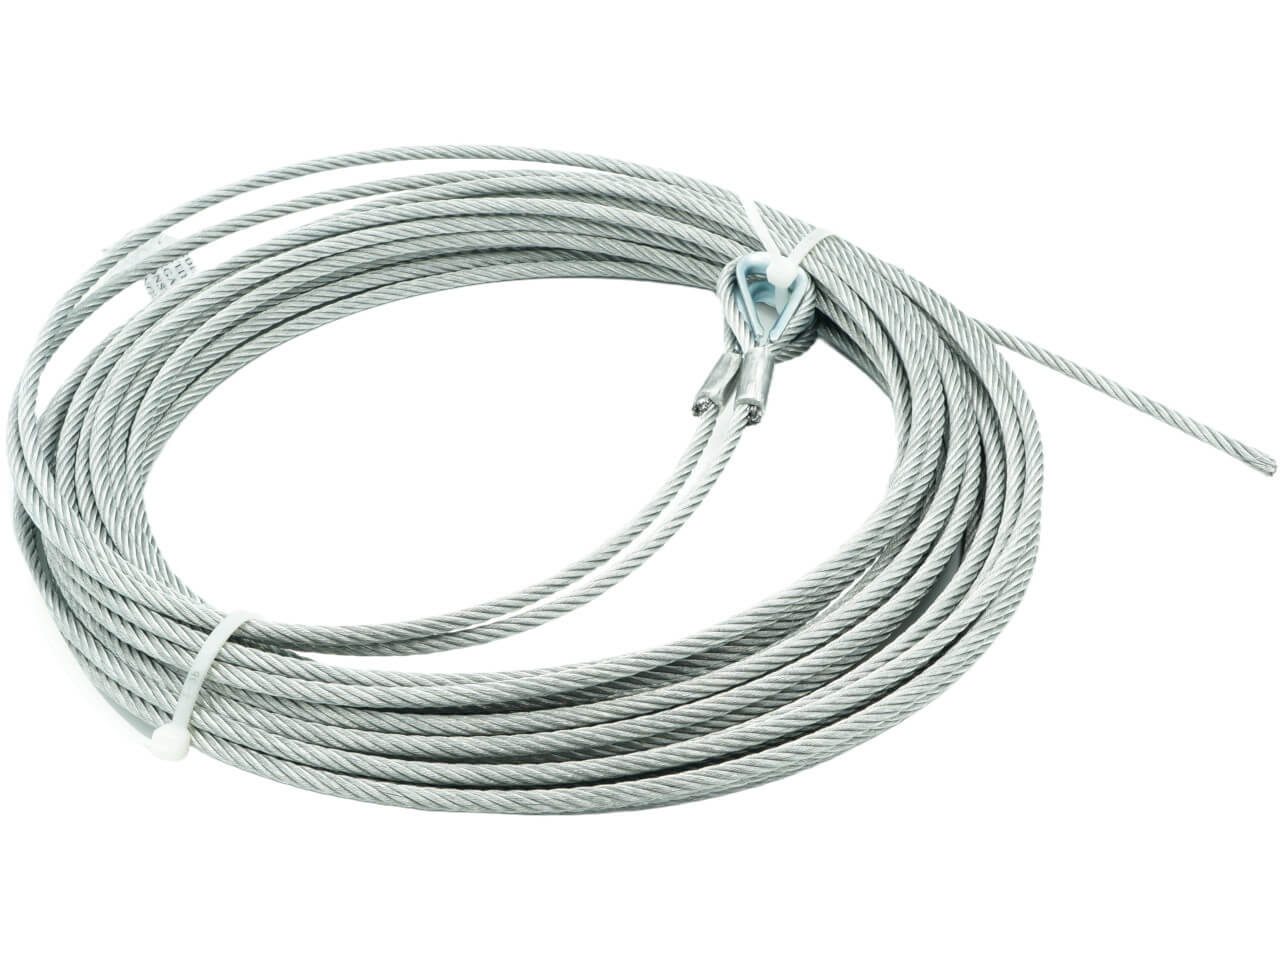 Cable Diameter 5,0mm Length 14m